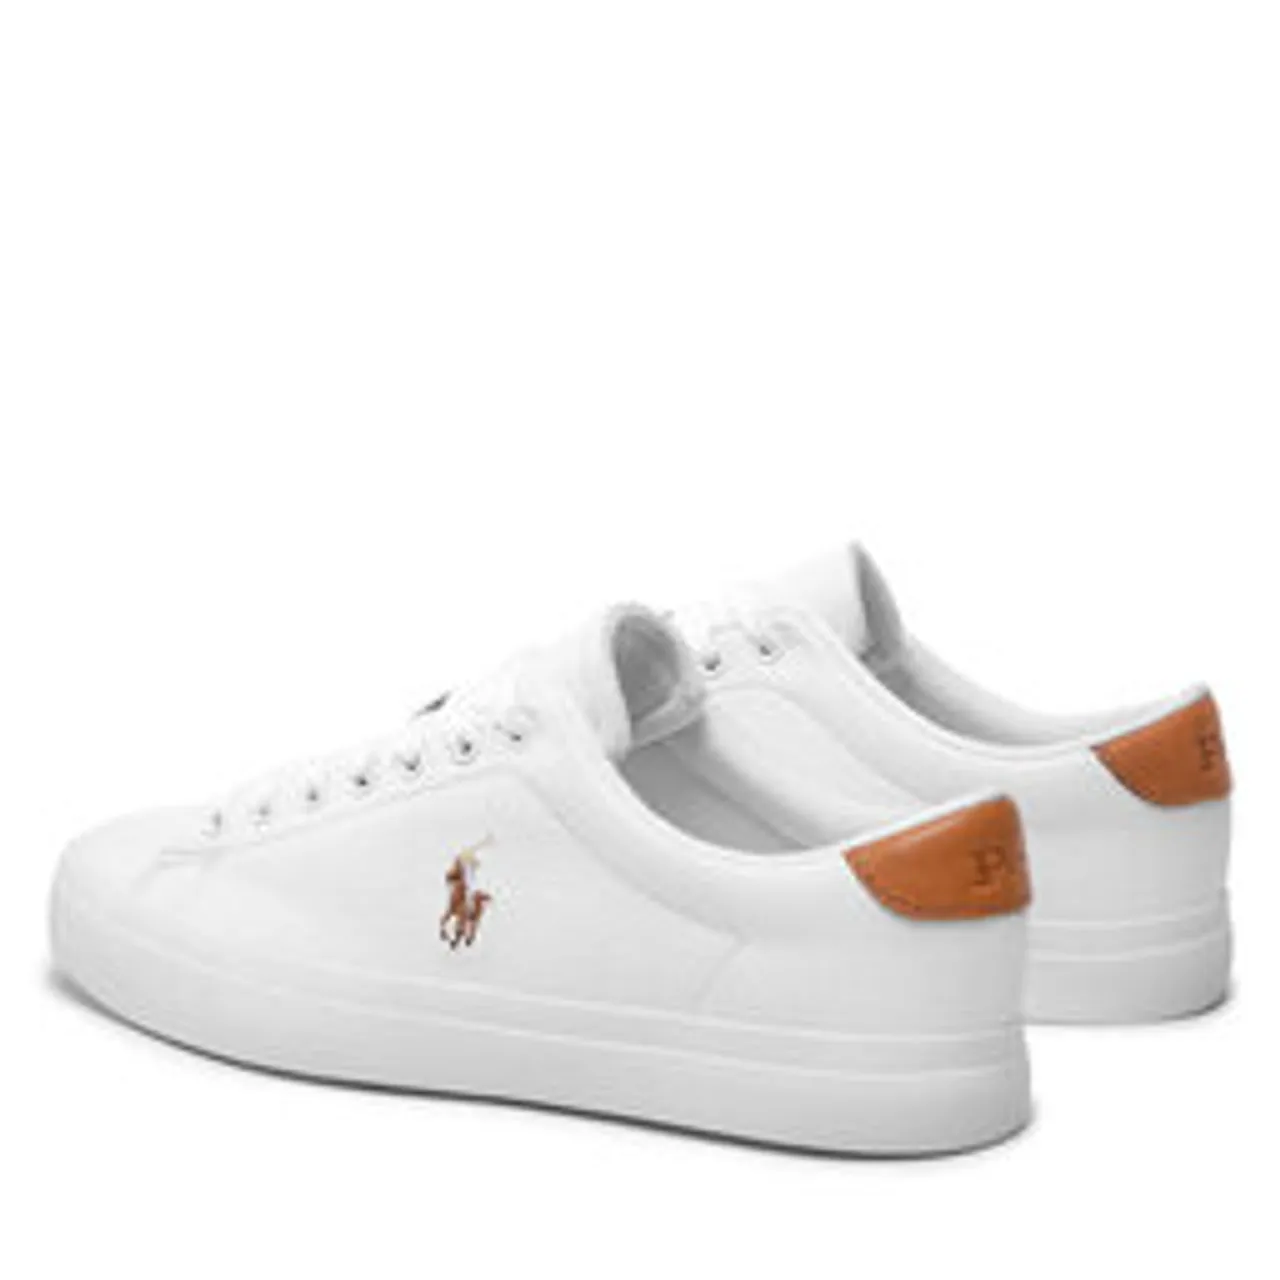 Sneakers Polo Ralph Lauren Longwood 816877702001 White/Multi Pp